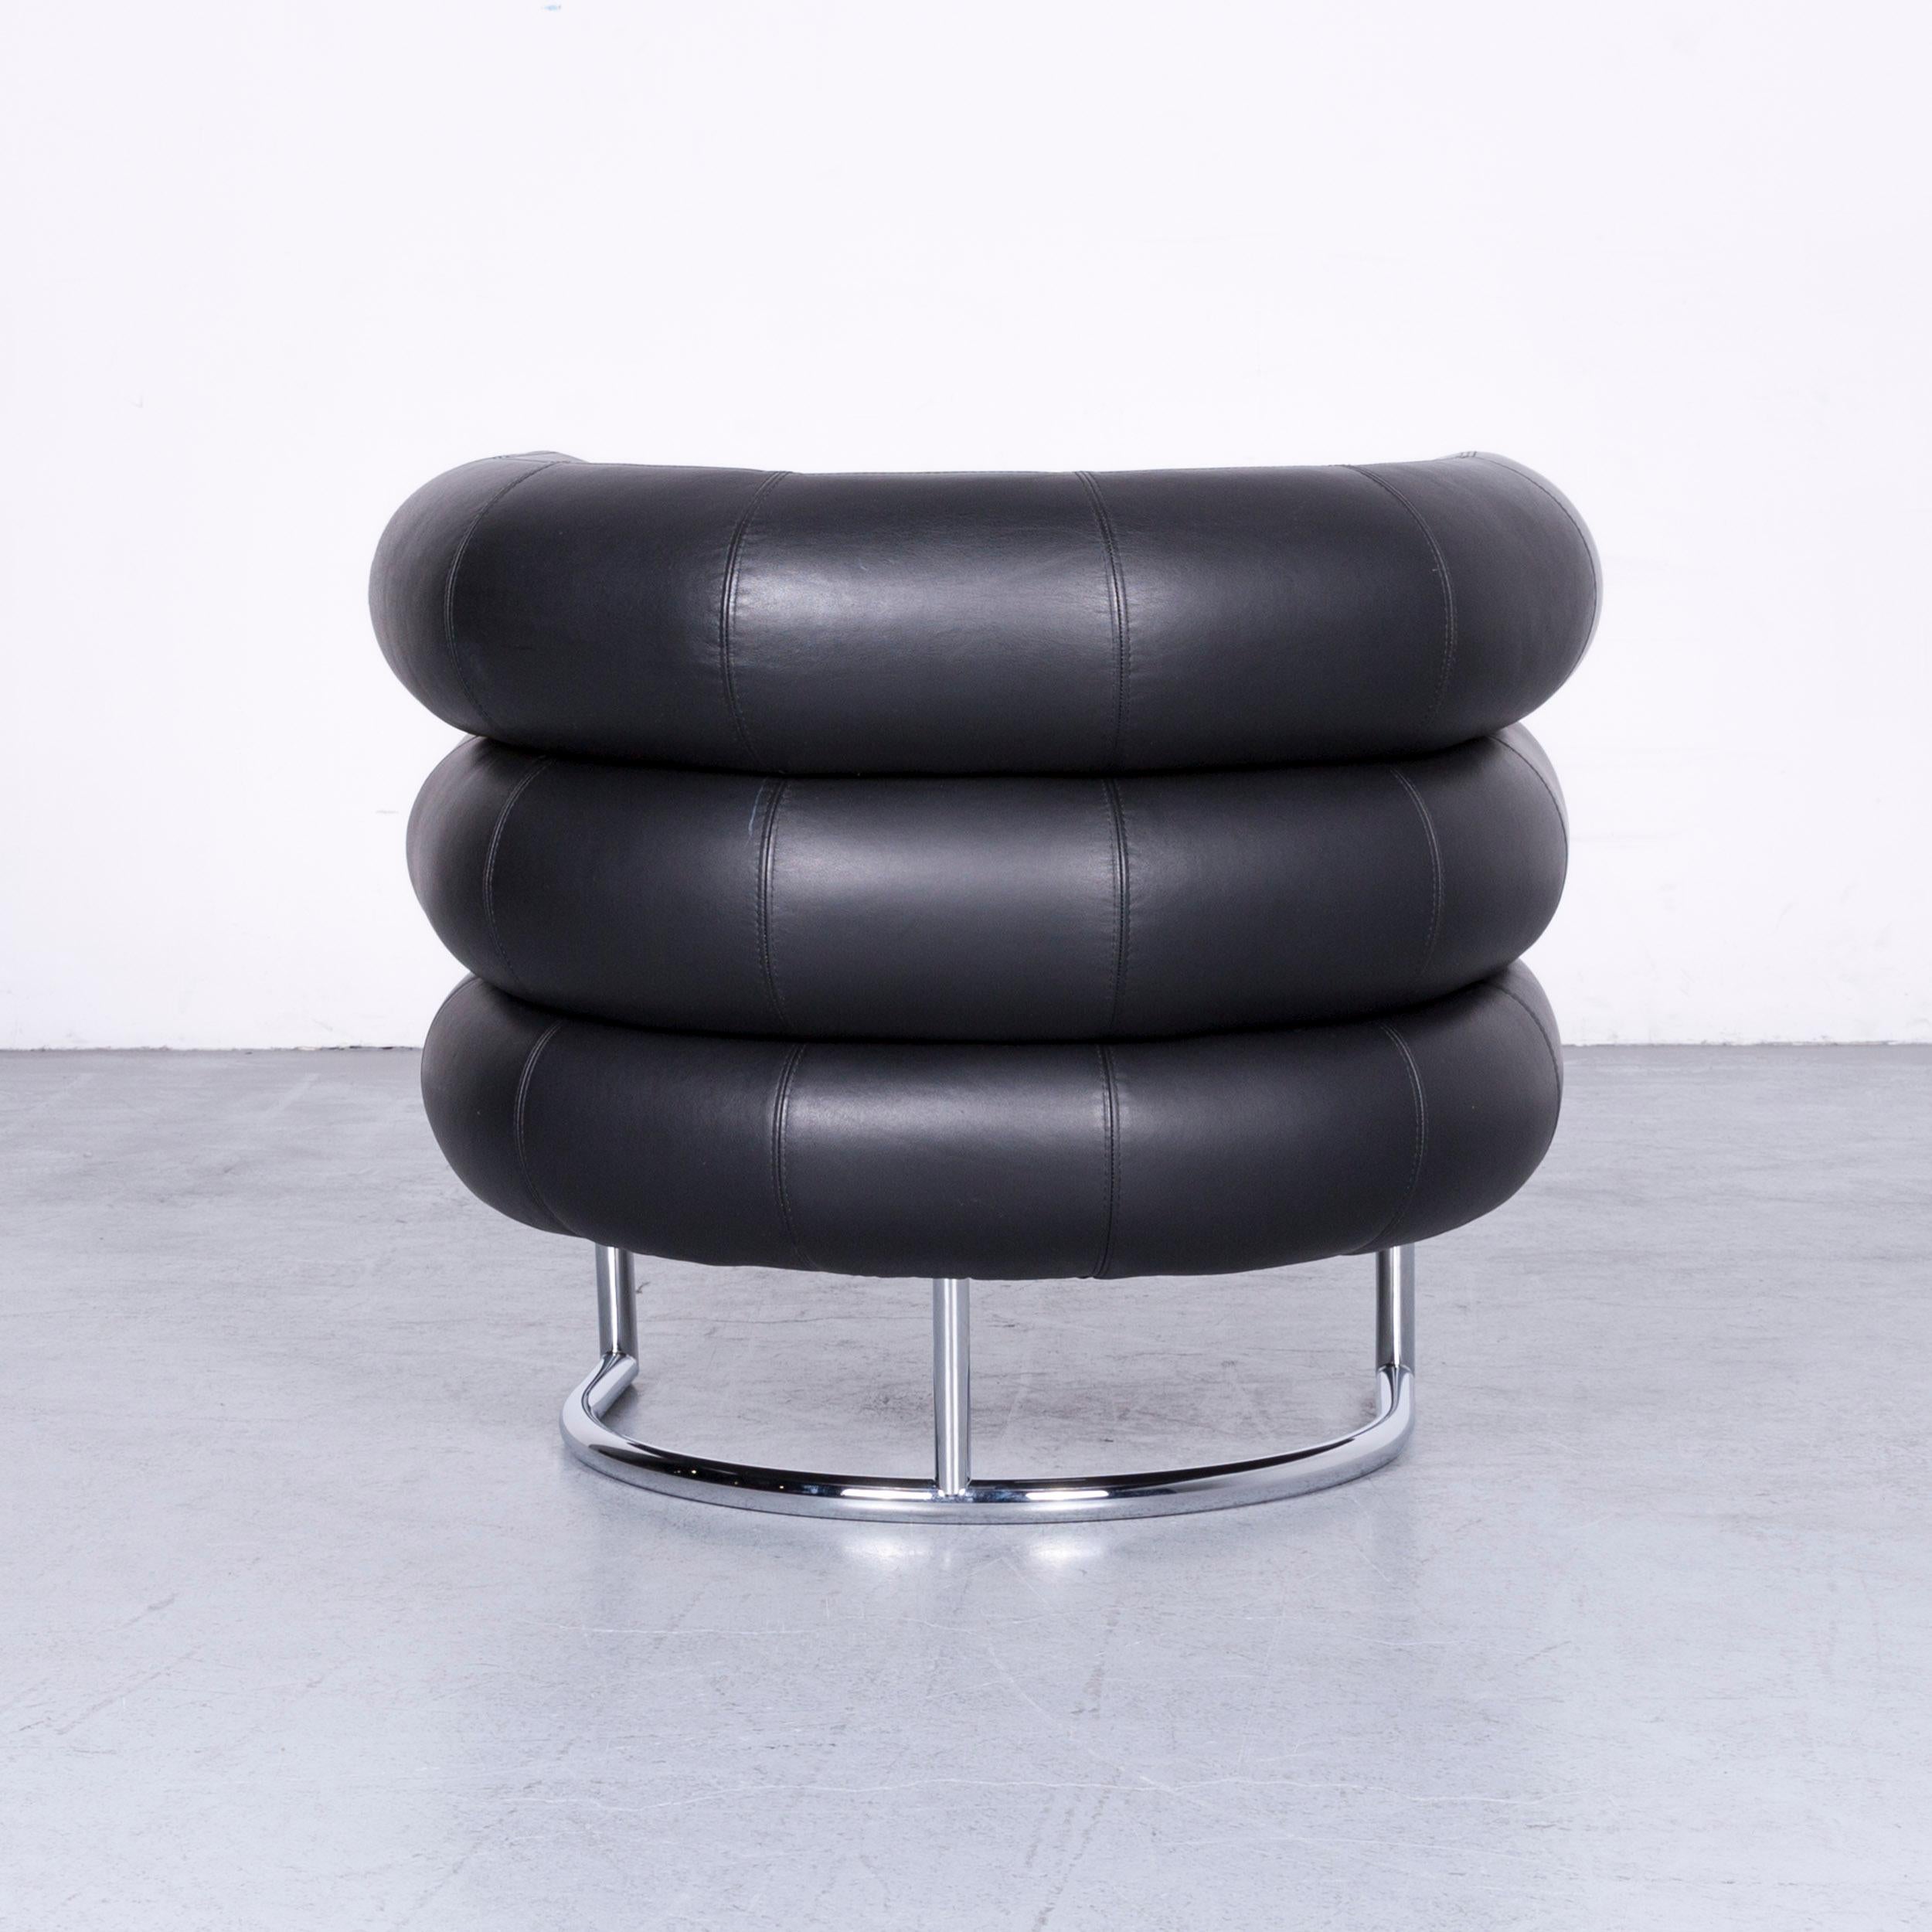 European ClassiCon Bibendum Chair Designer Leather Armchair Black Genuine Leather Chair For Sale